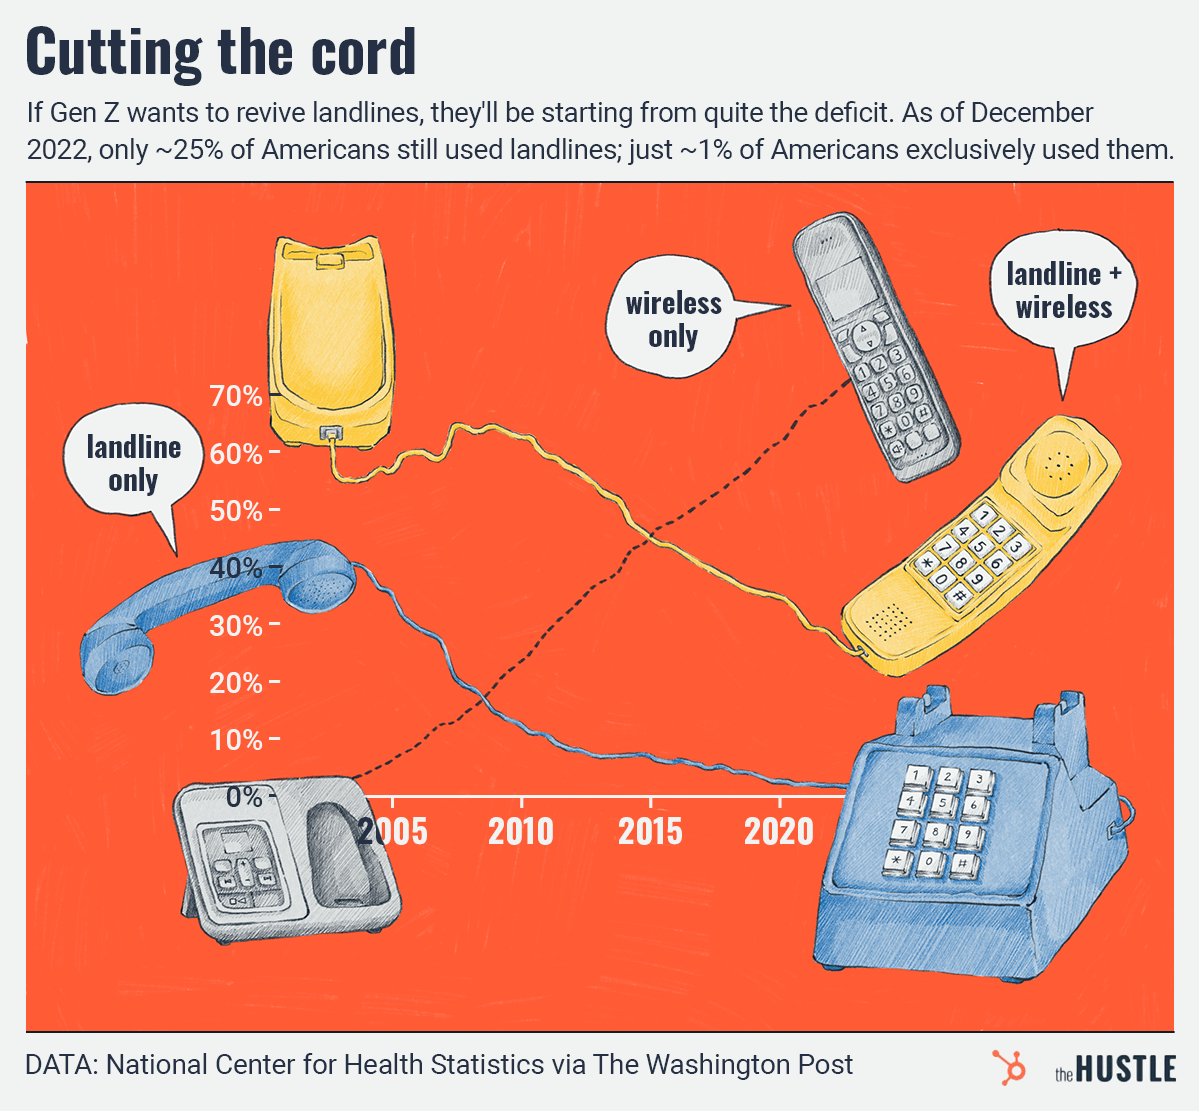 adoption of landlines versus mobile phones over time